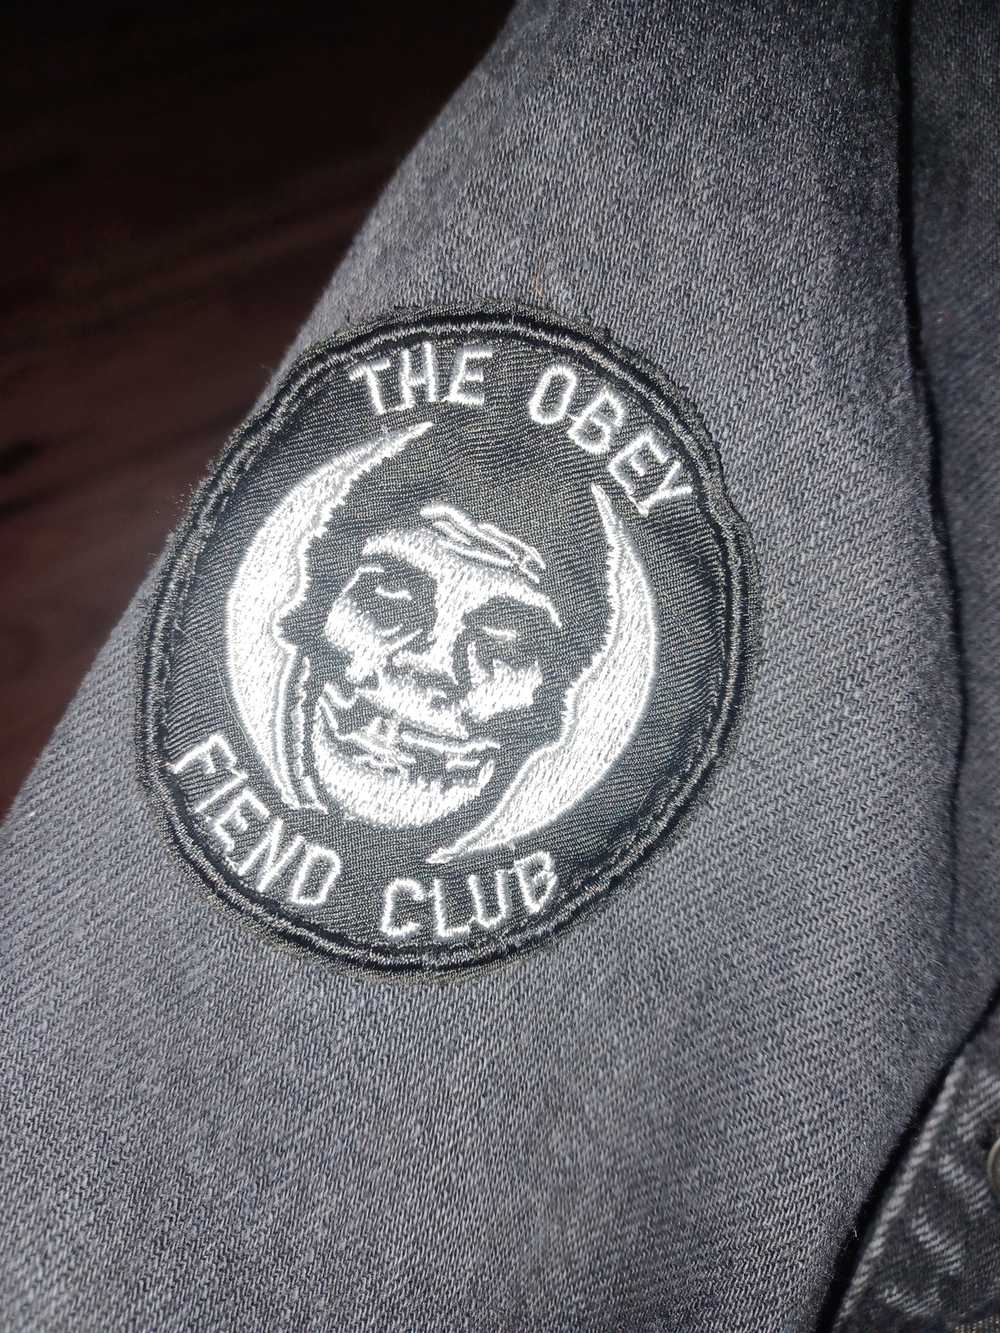 Obey Obey Misfits Fiend Club Denium Jacket - image 3